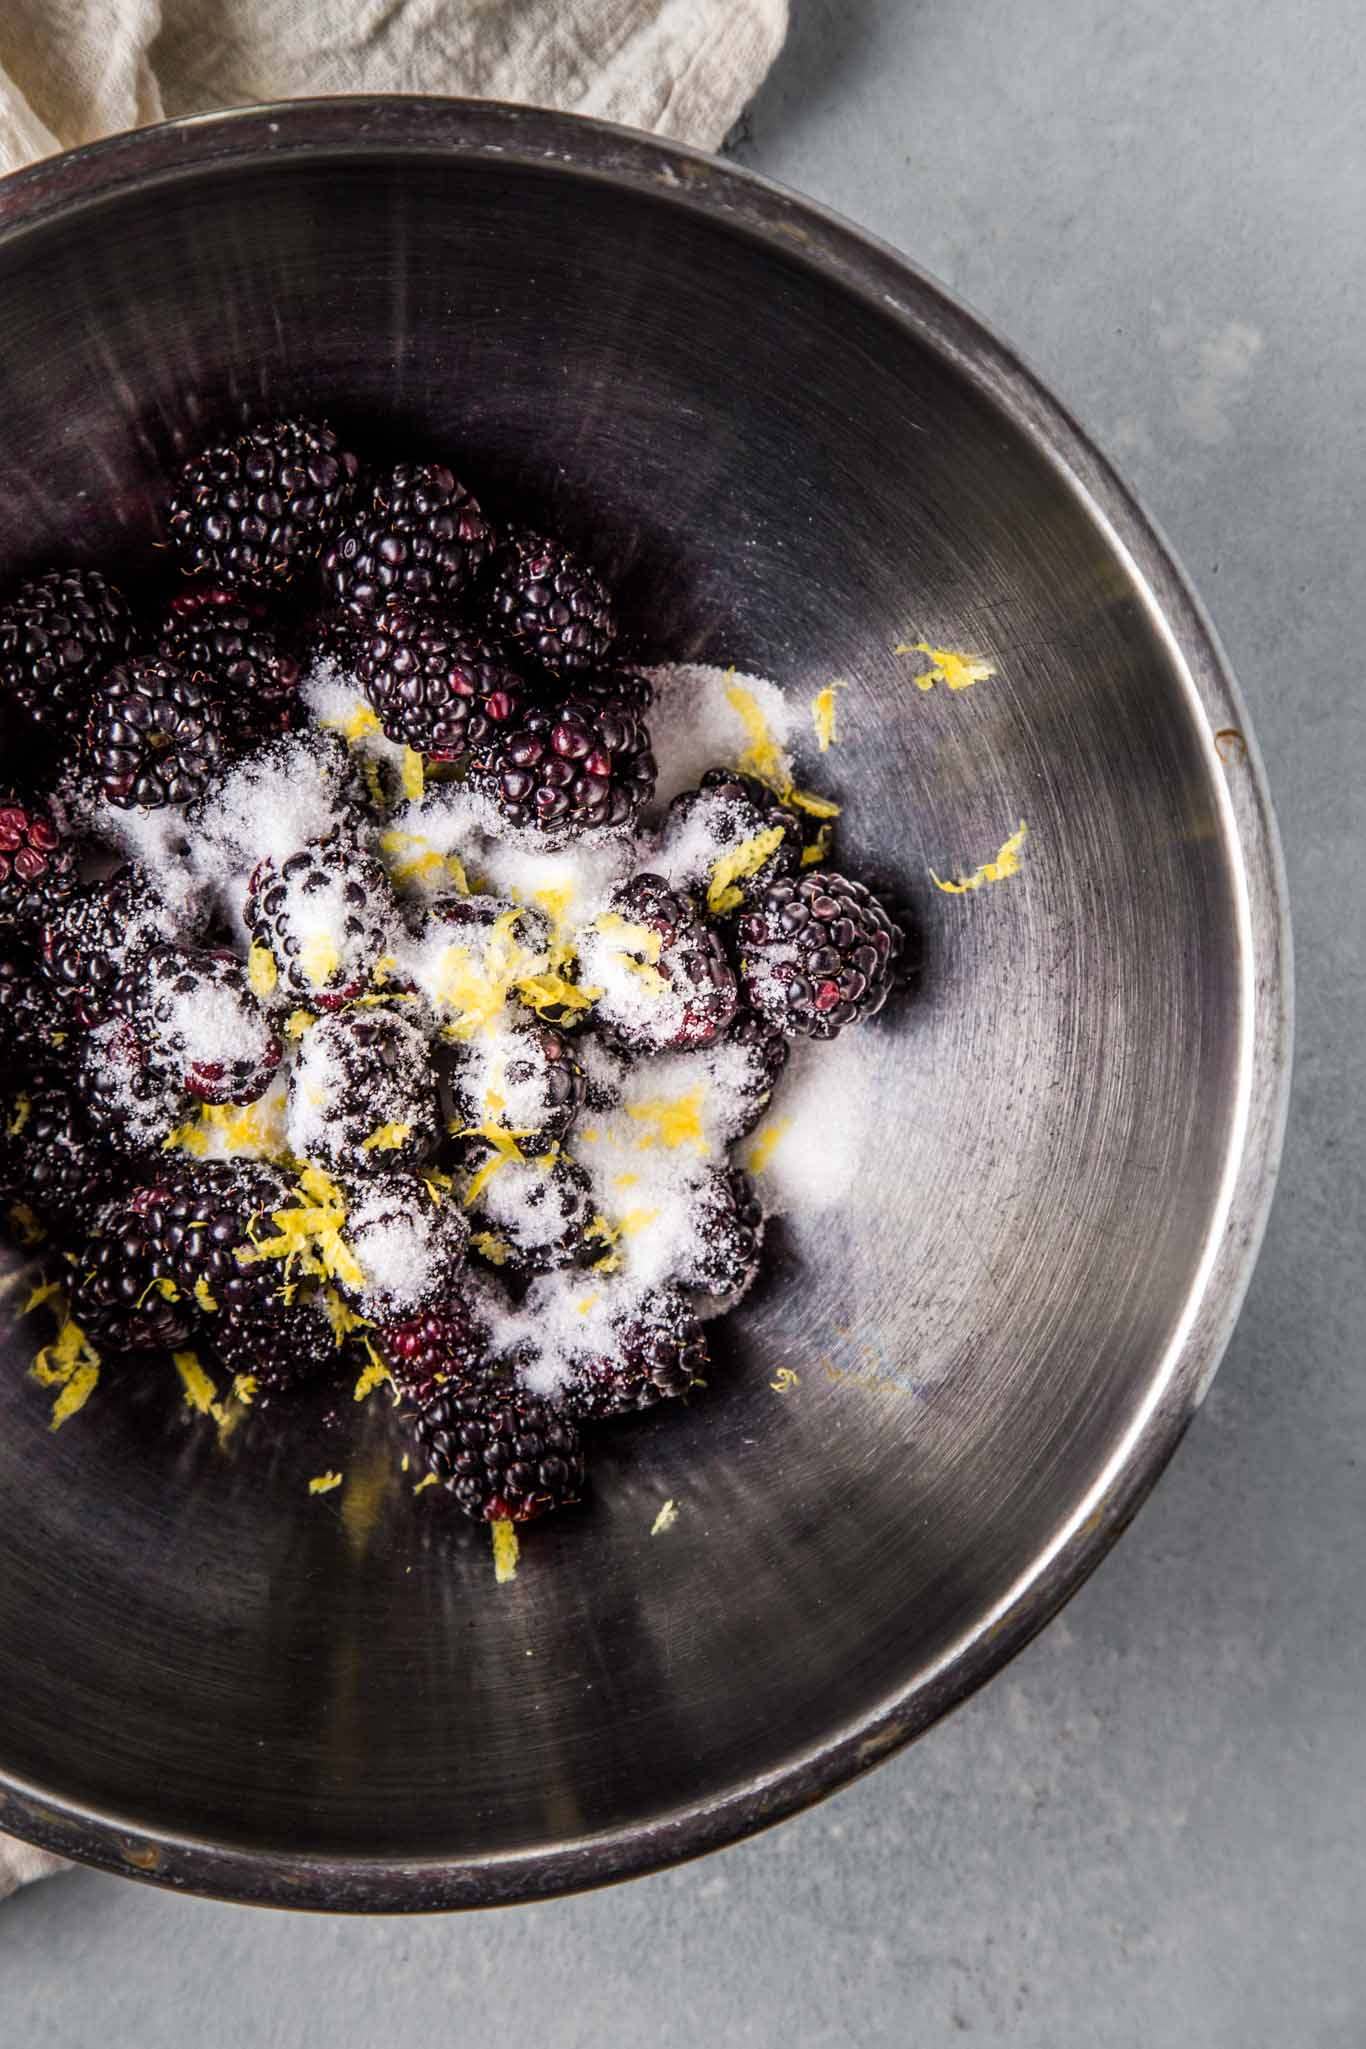 Blackberries tossed with sugar and lemon zest.